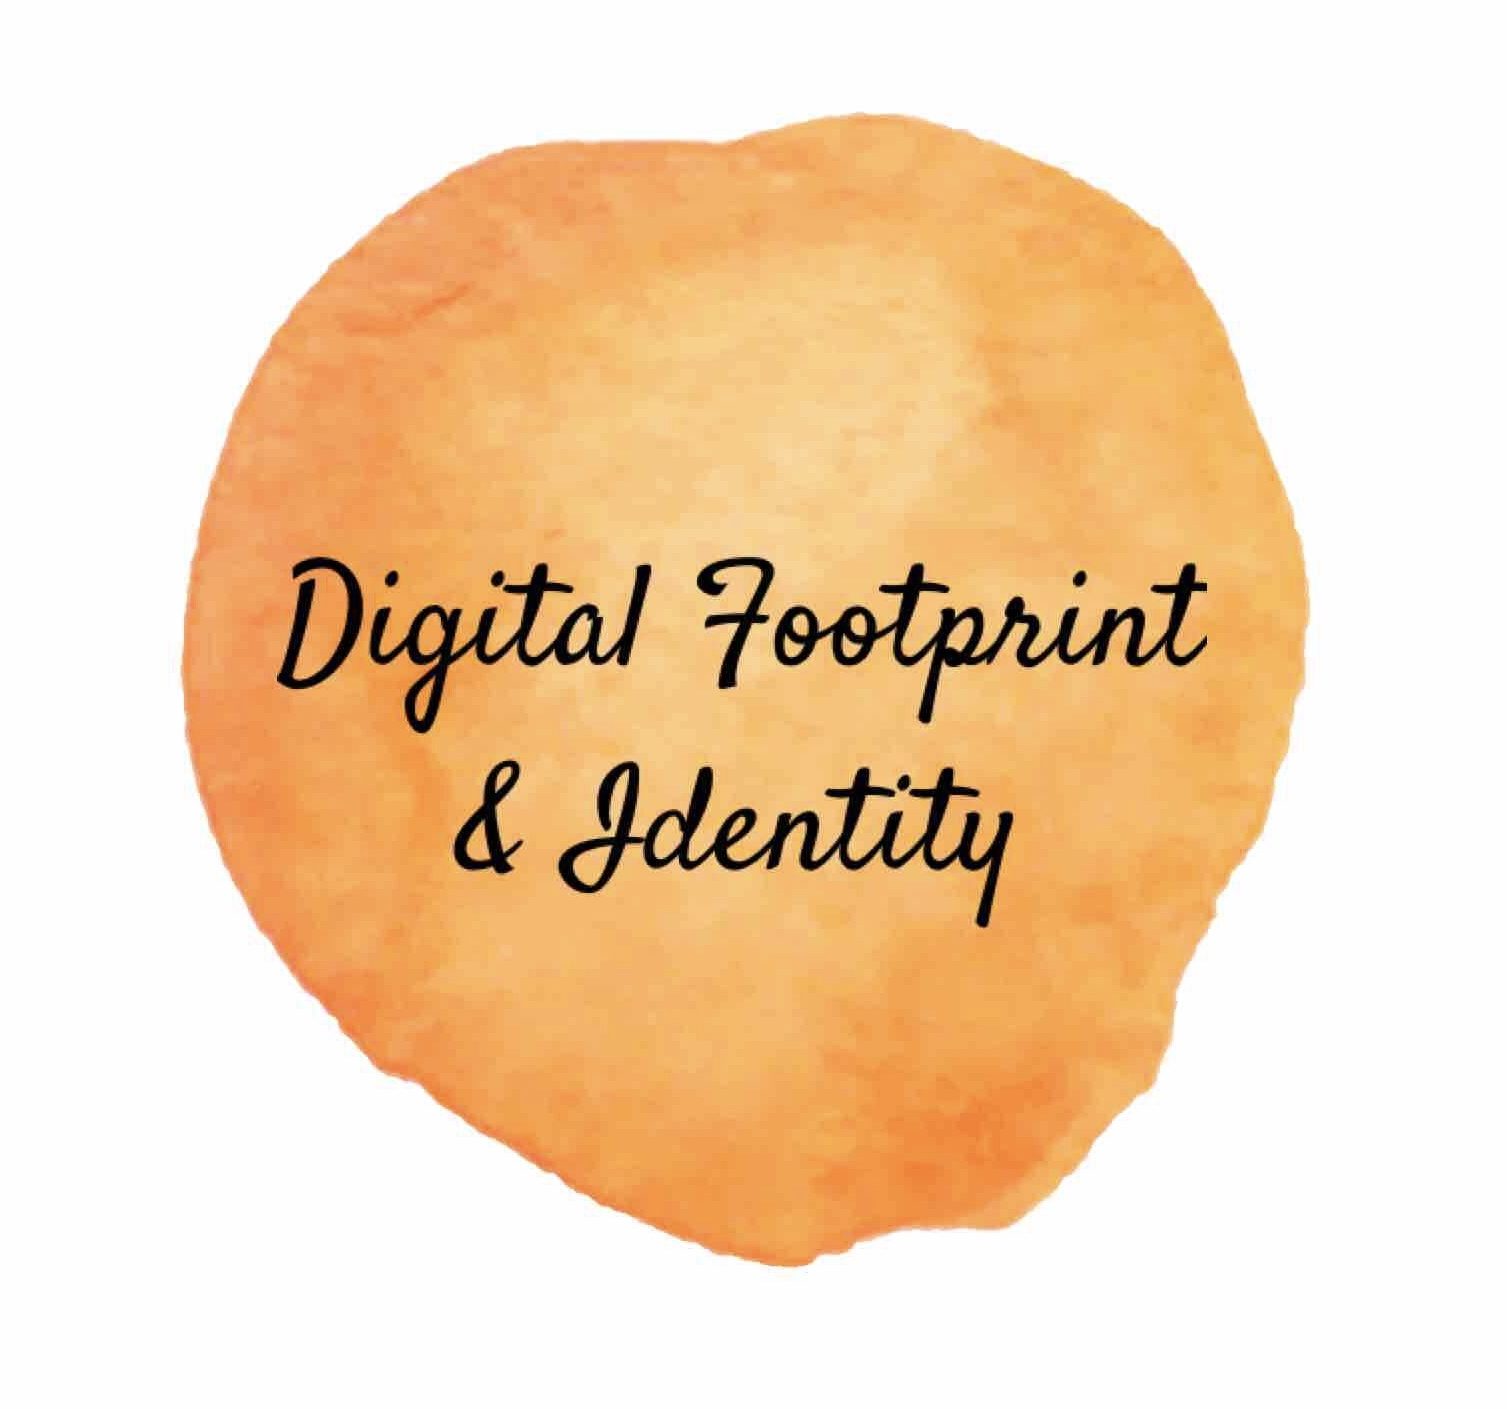 Dig Cit Digital Footprint and Identity